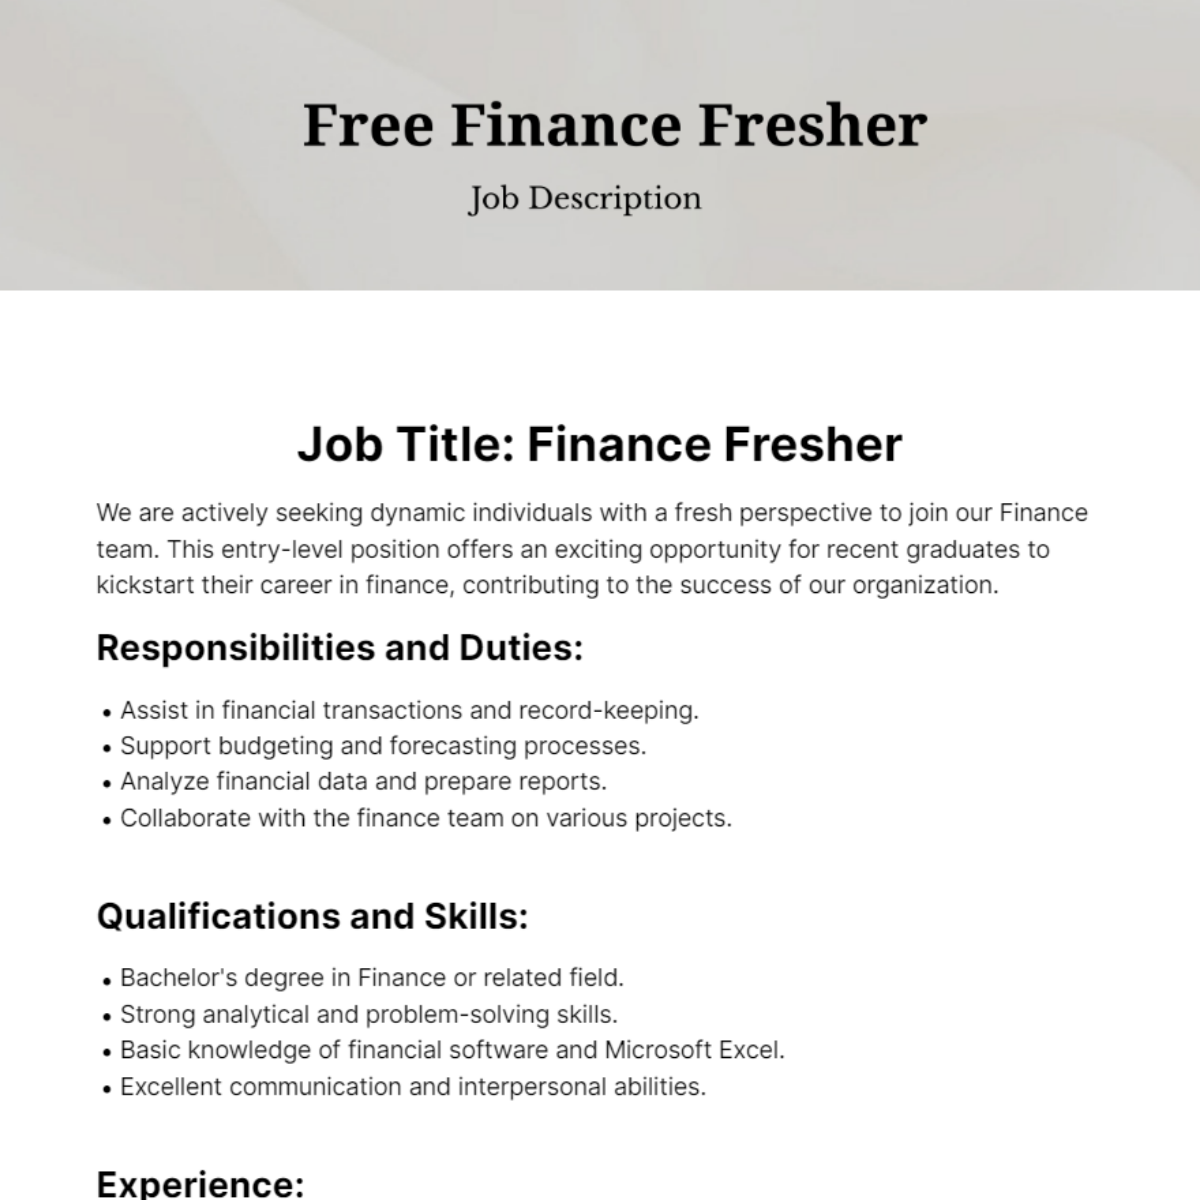 Finance Fresher Job Description Template